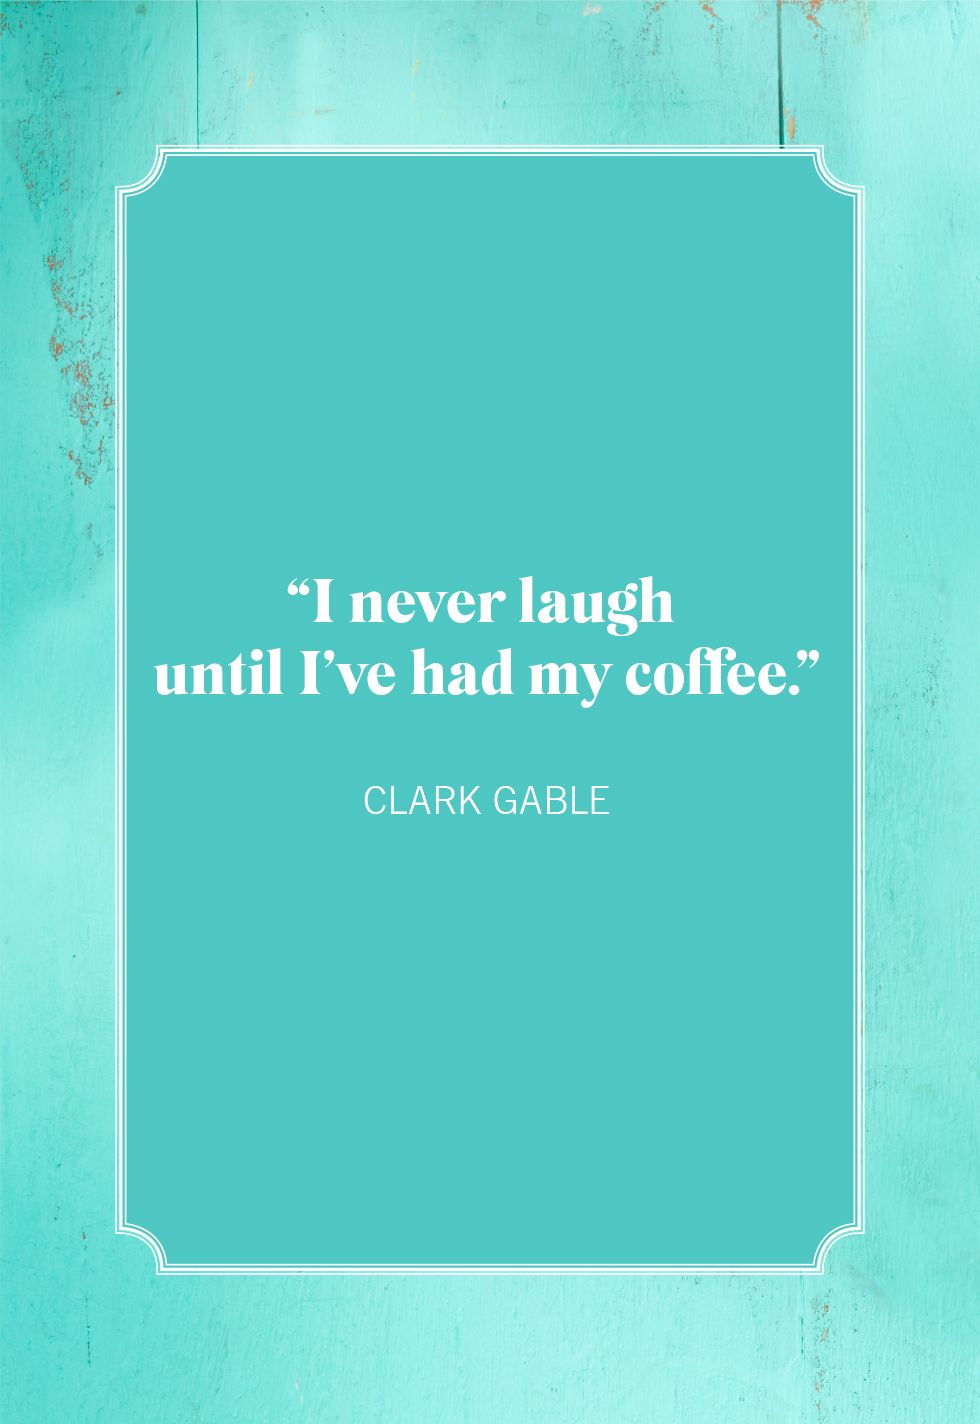 clark gable quotes